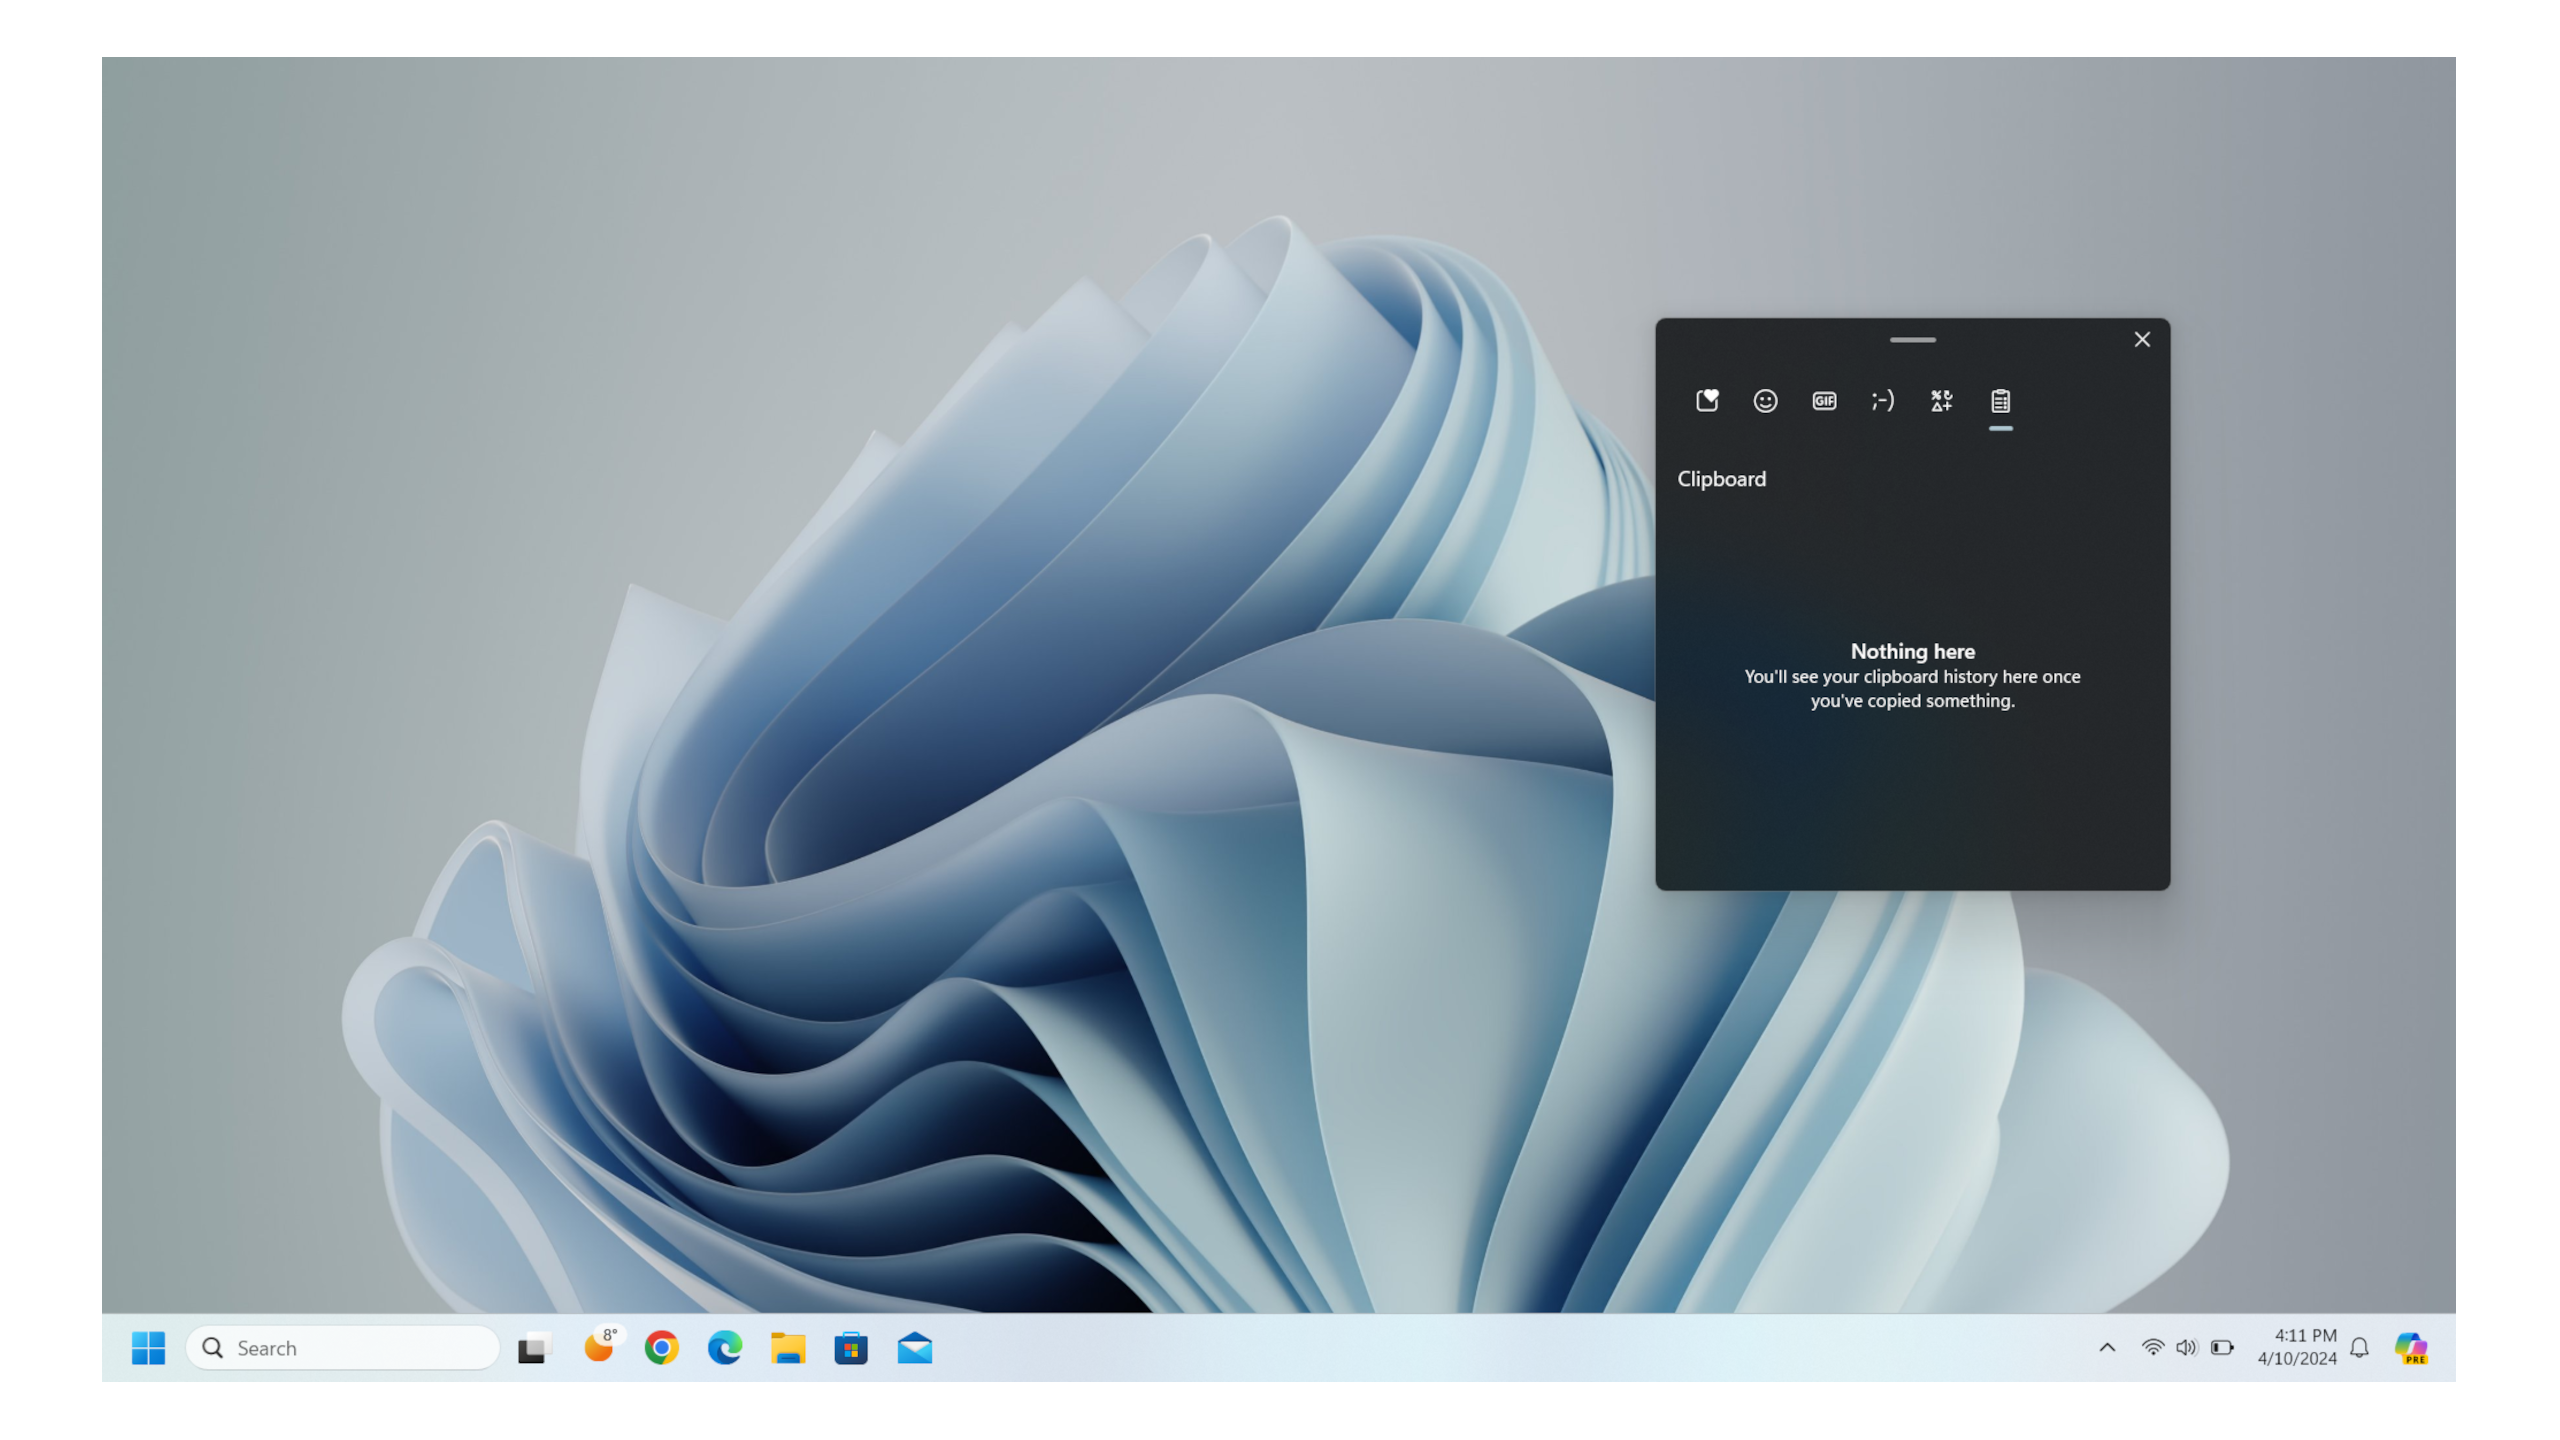 Windows clipboard interface on the desktop